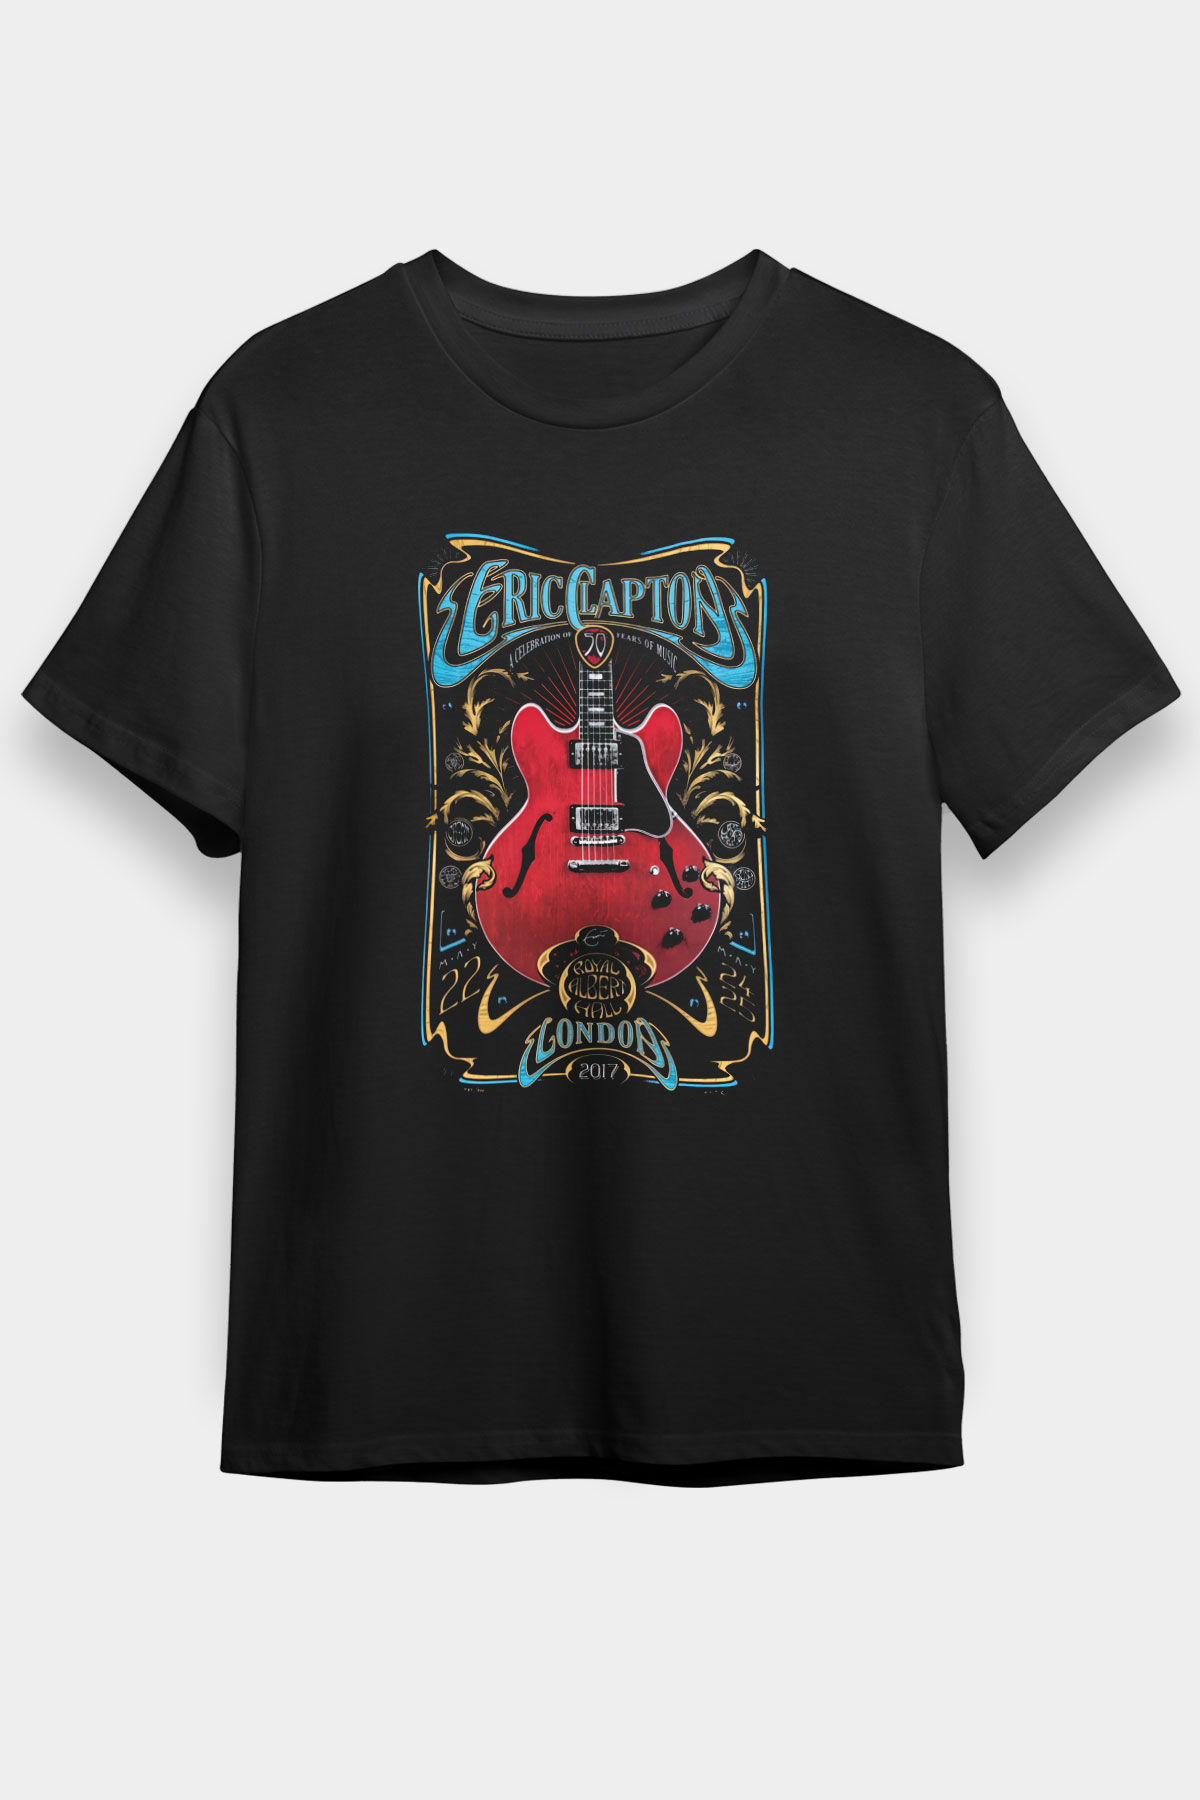 Eric Clapton T shirt, Music Band Tshirt   17